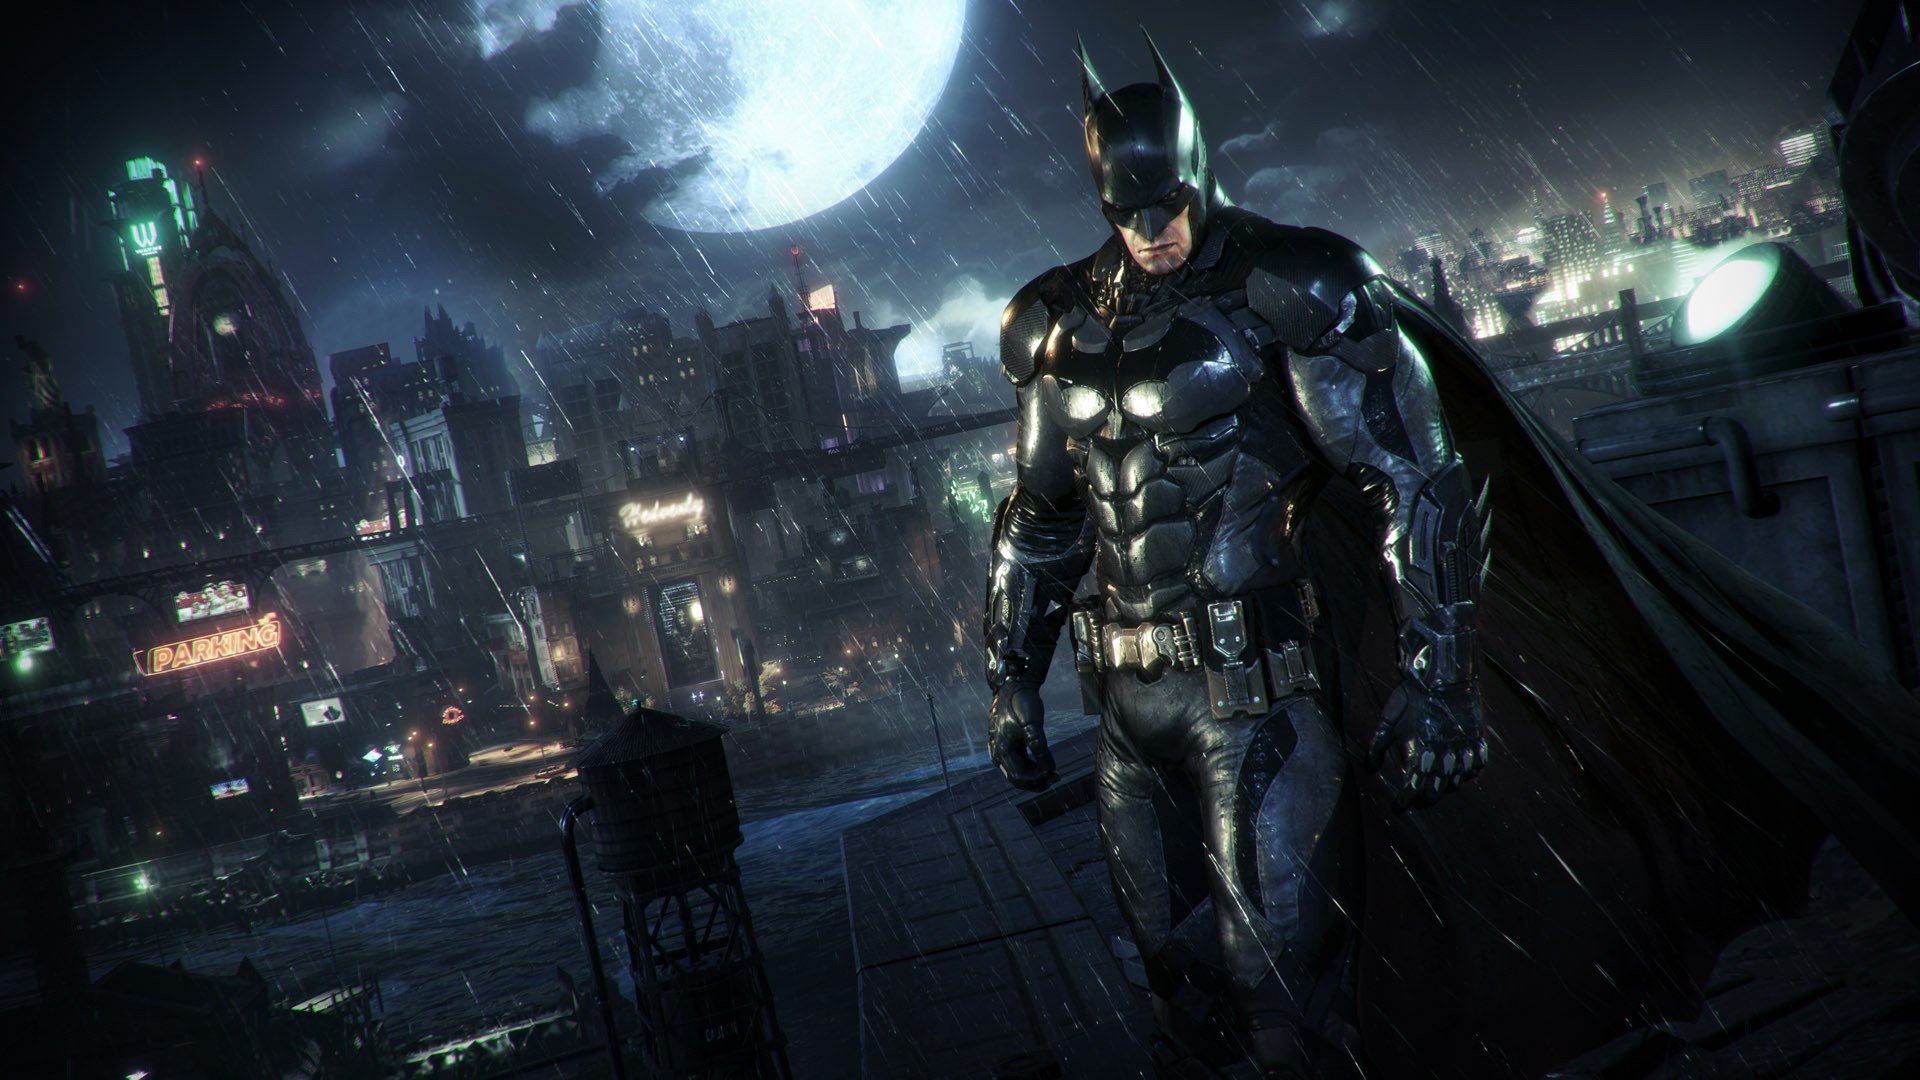 June 23rd - Batman: Arkham Knight